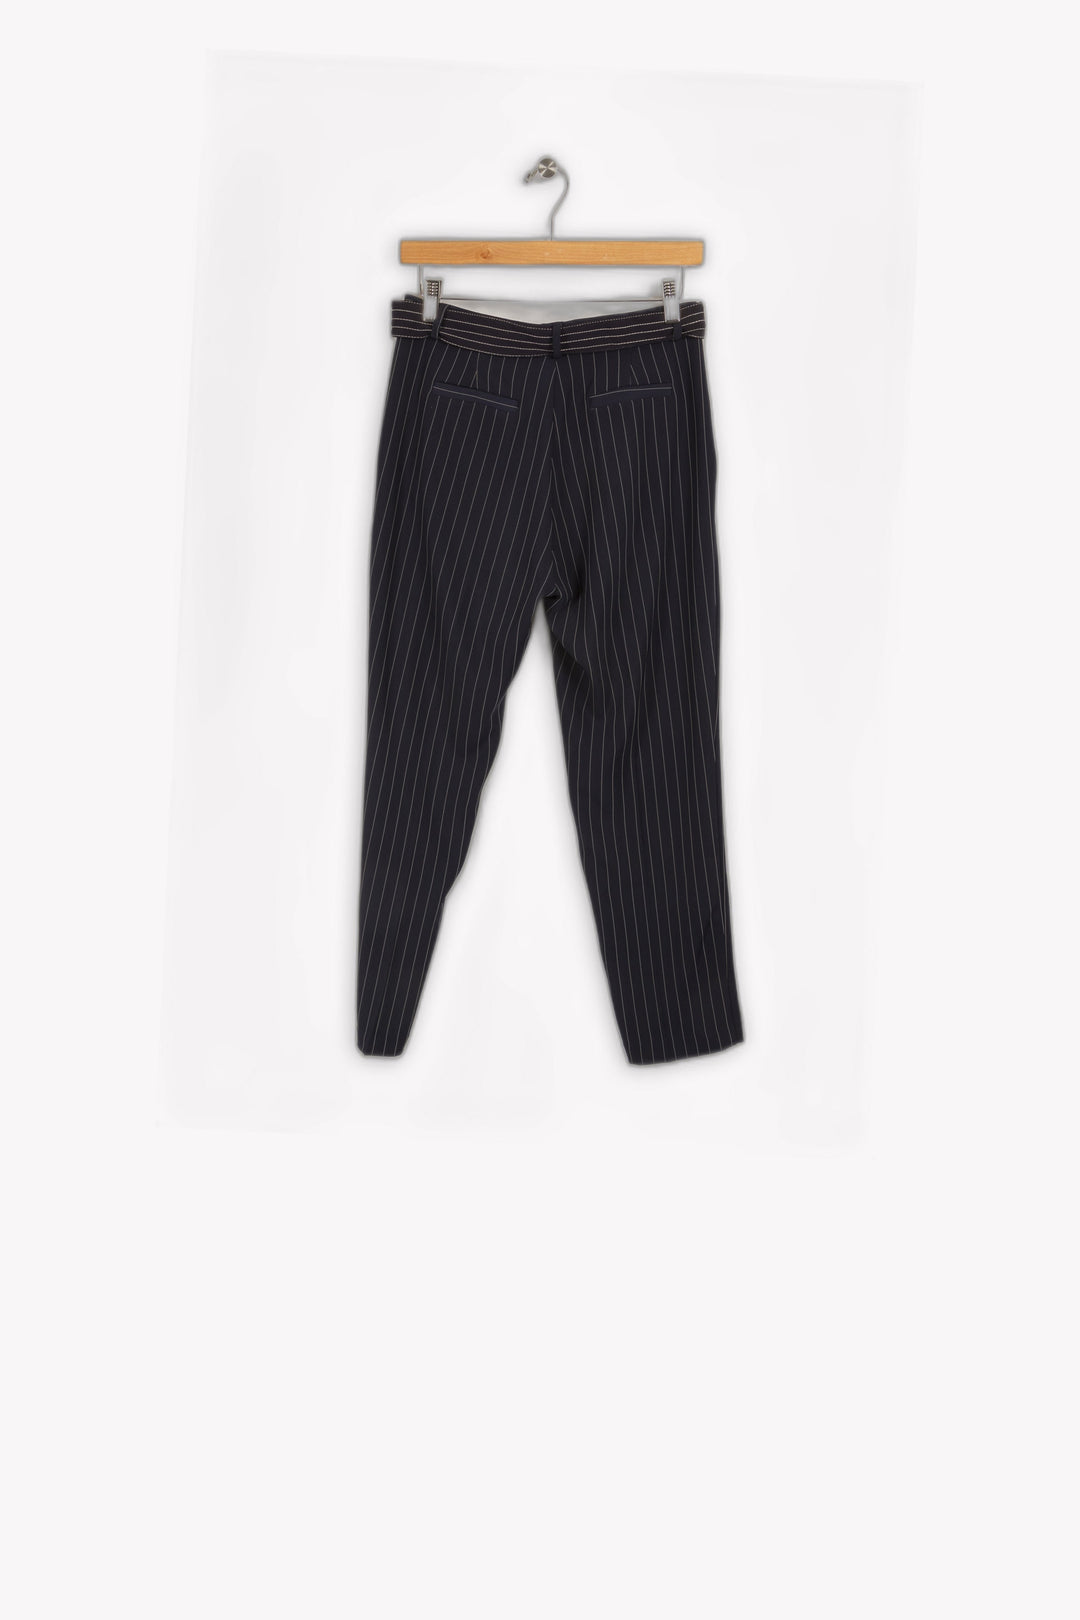 Long vertical striped pants - S/36